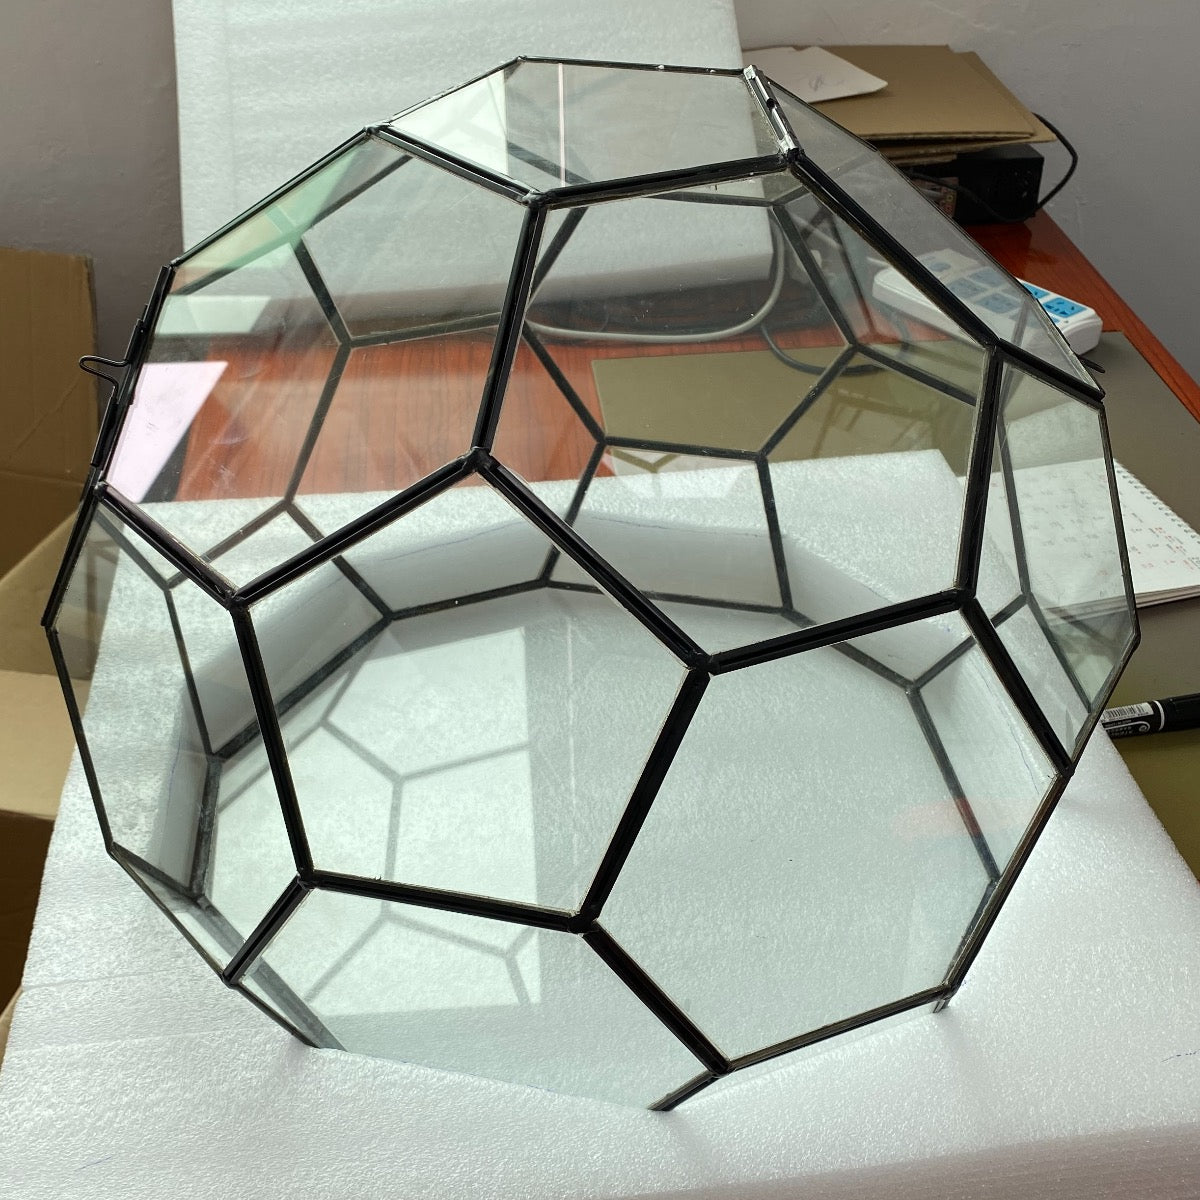 Geometric glass Terrarium